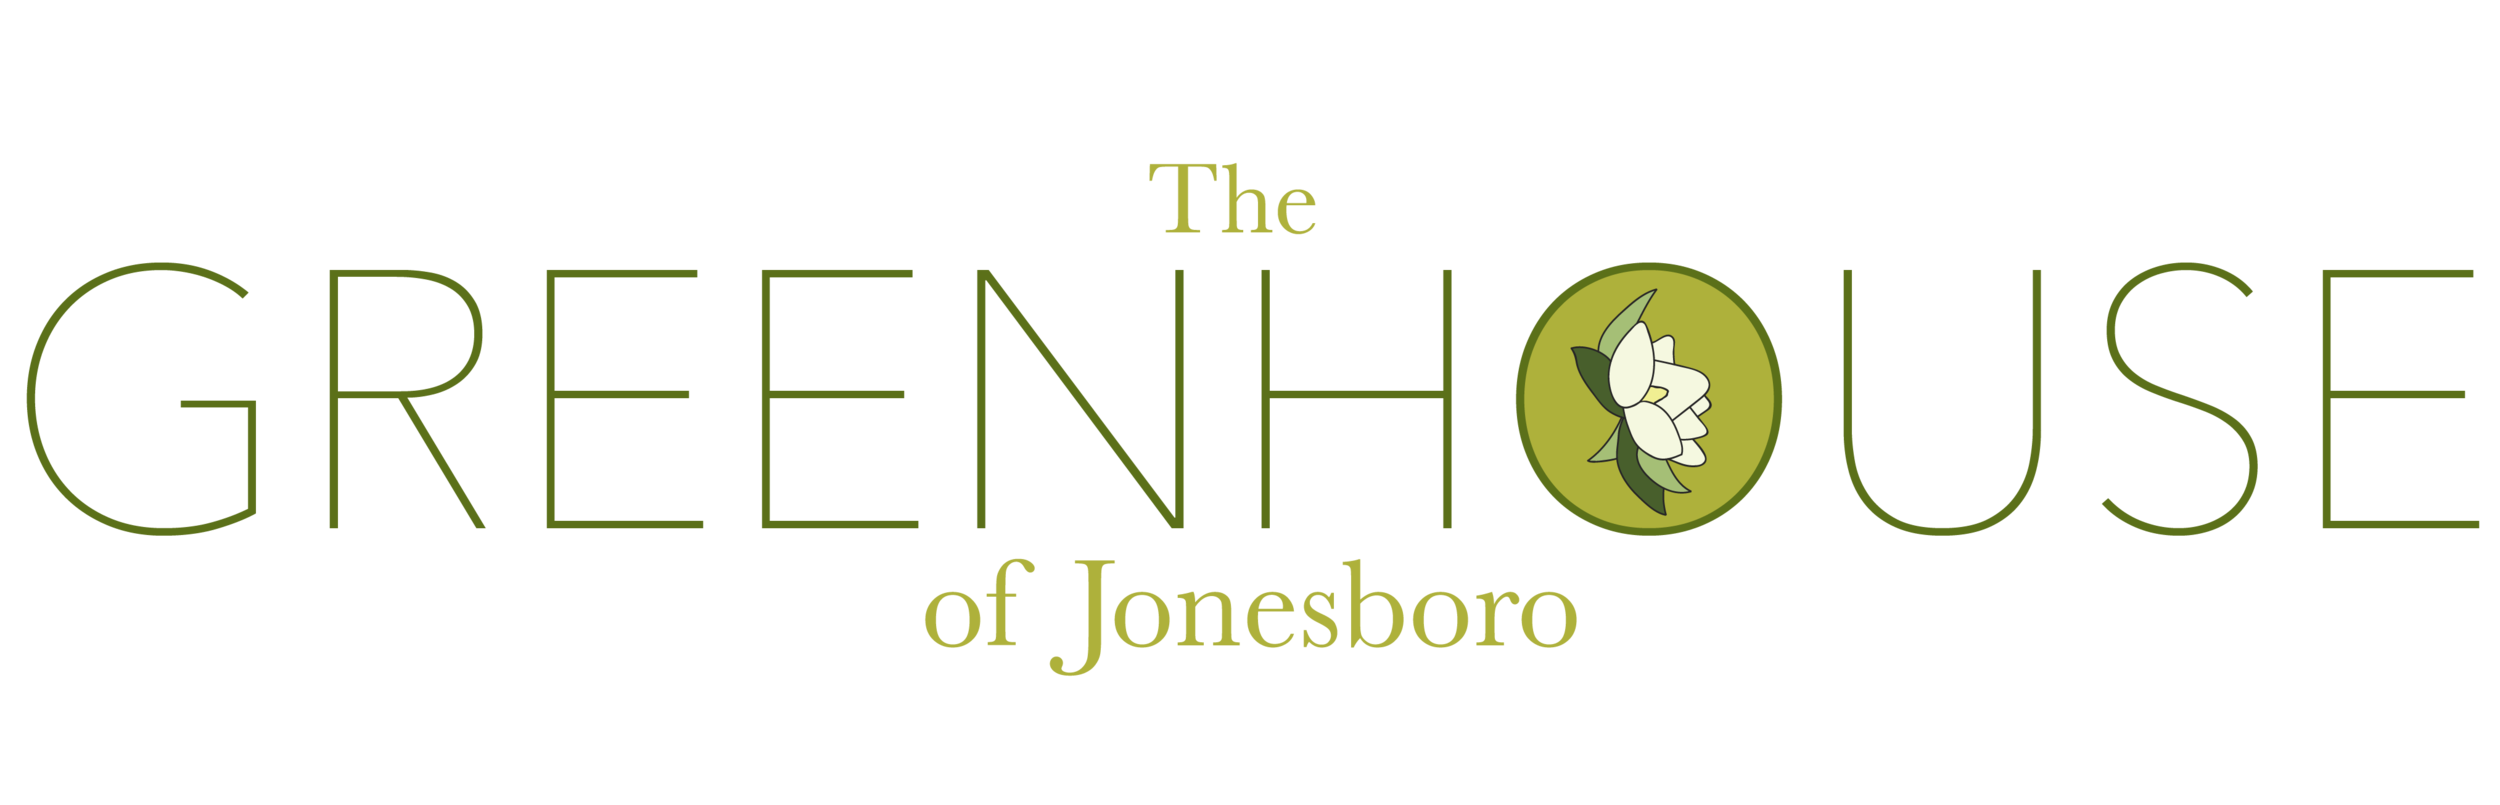 Greenhouse 2018 Logo.png